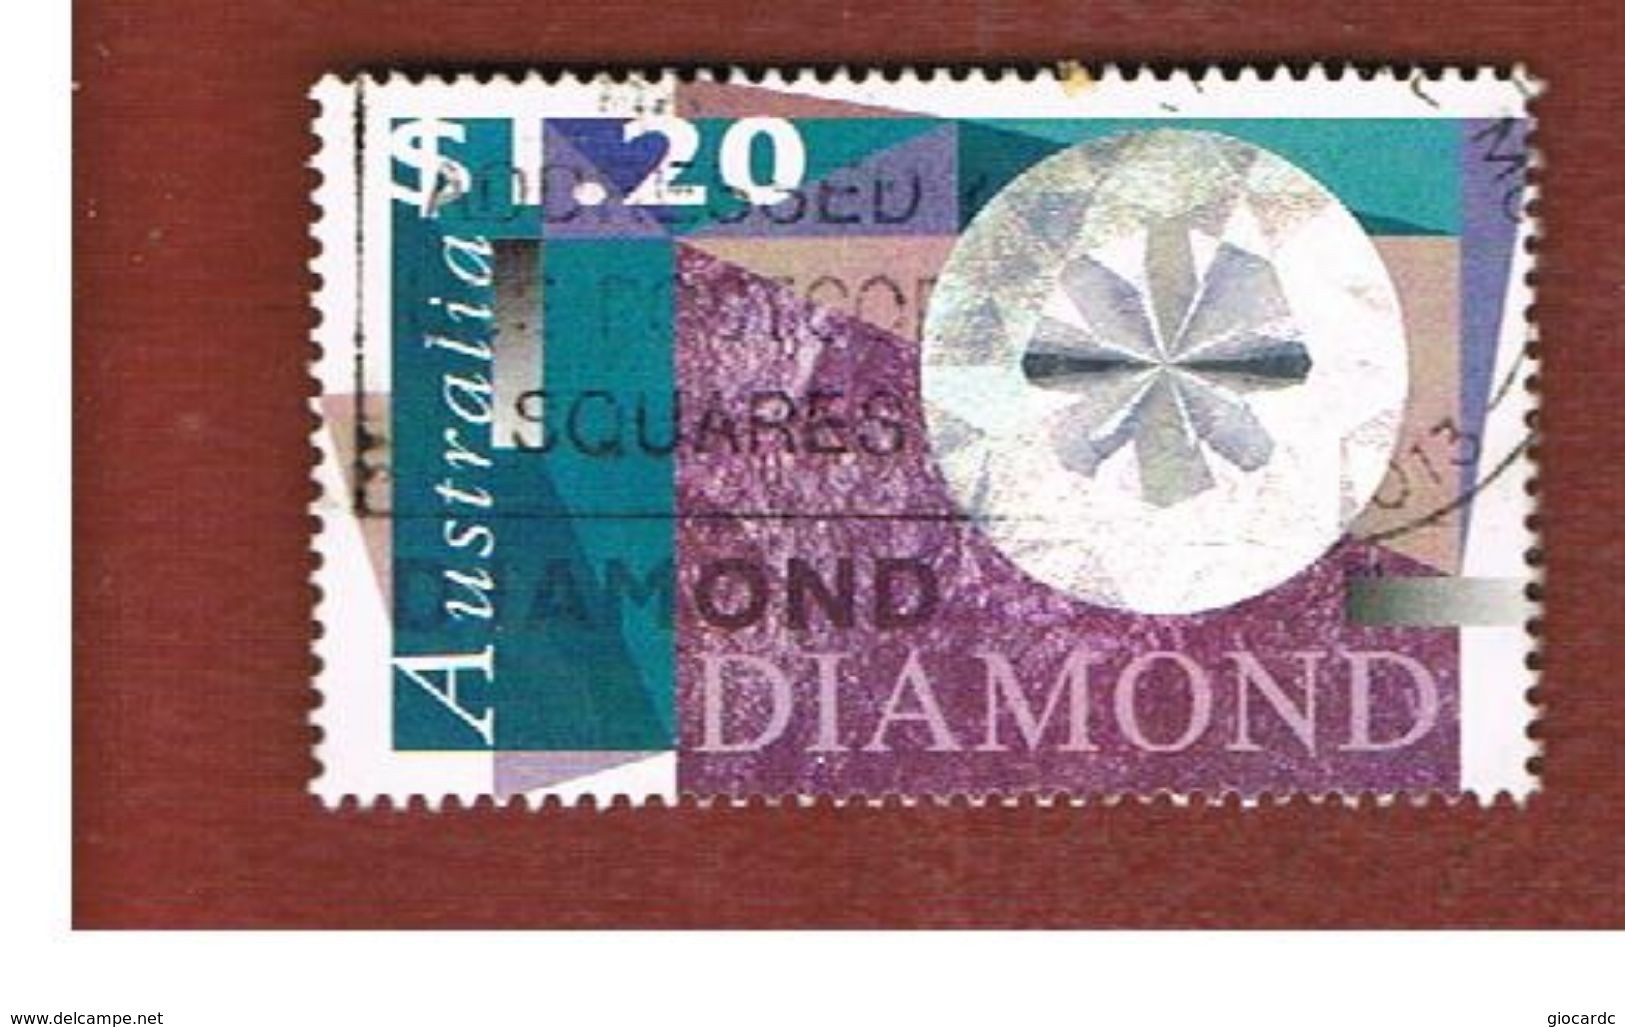 AUSTRALIA  -  SG 1642 -      1996  DIAMOND  -       USED - Oblitérés